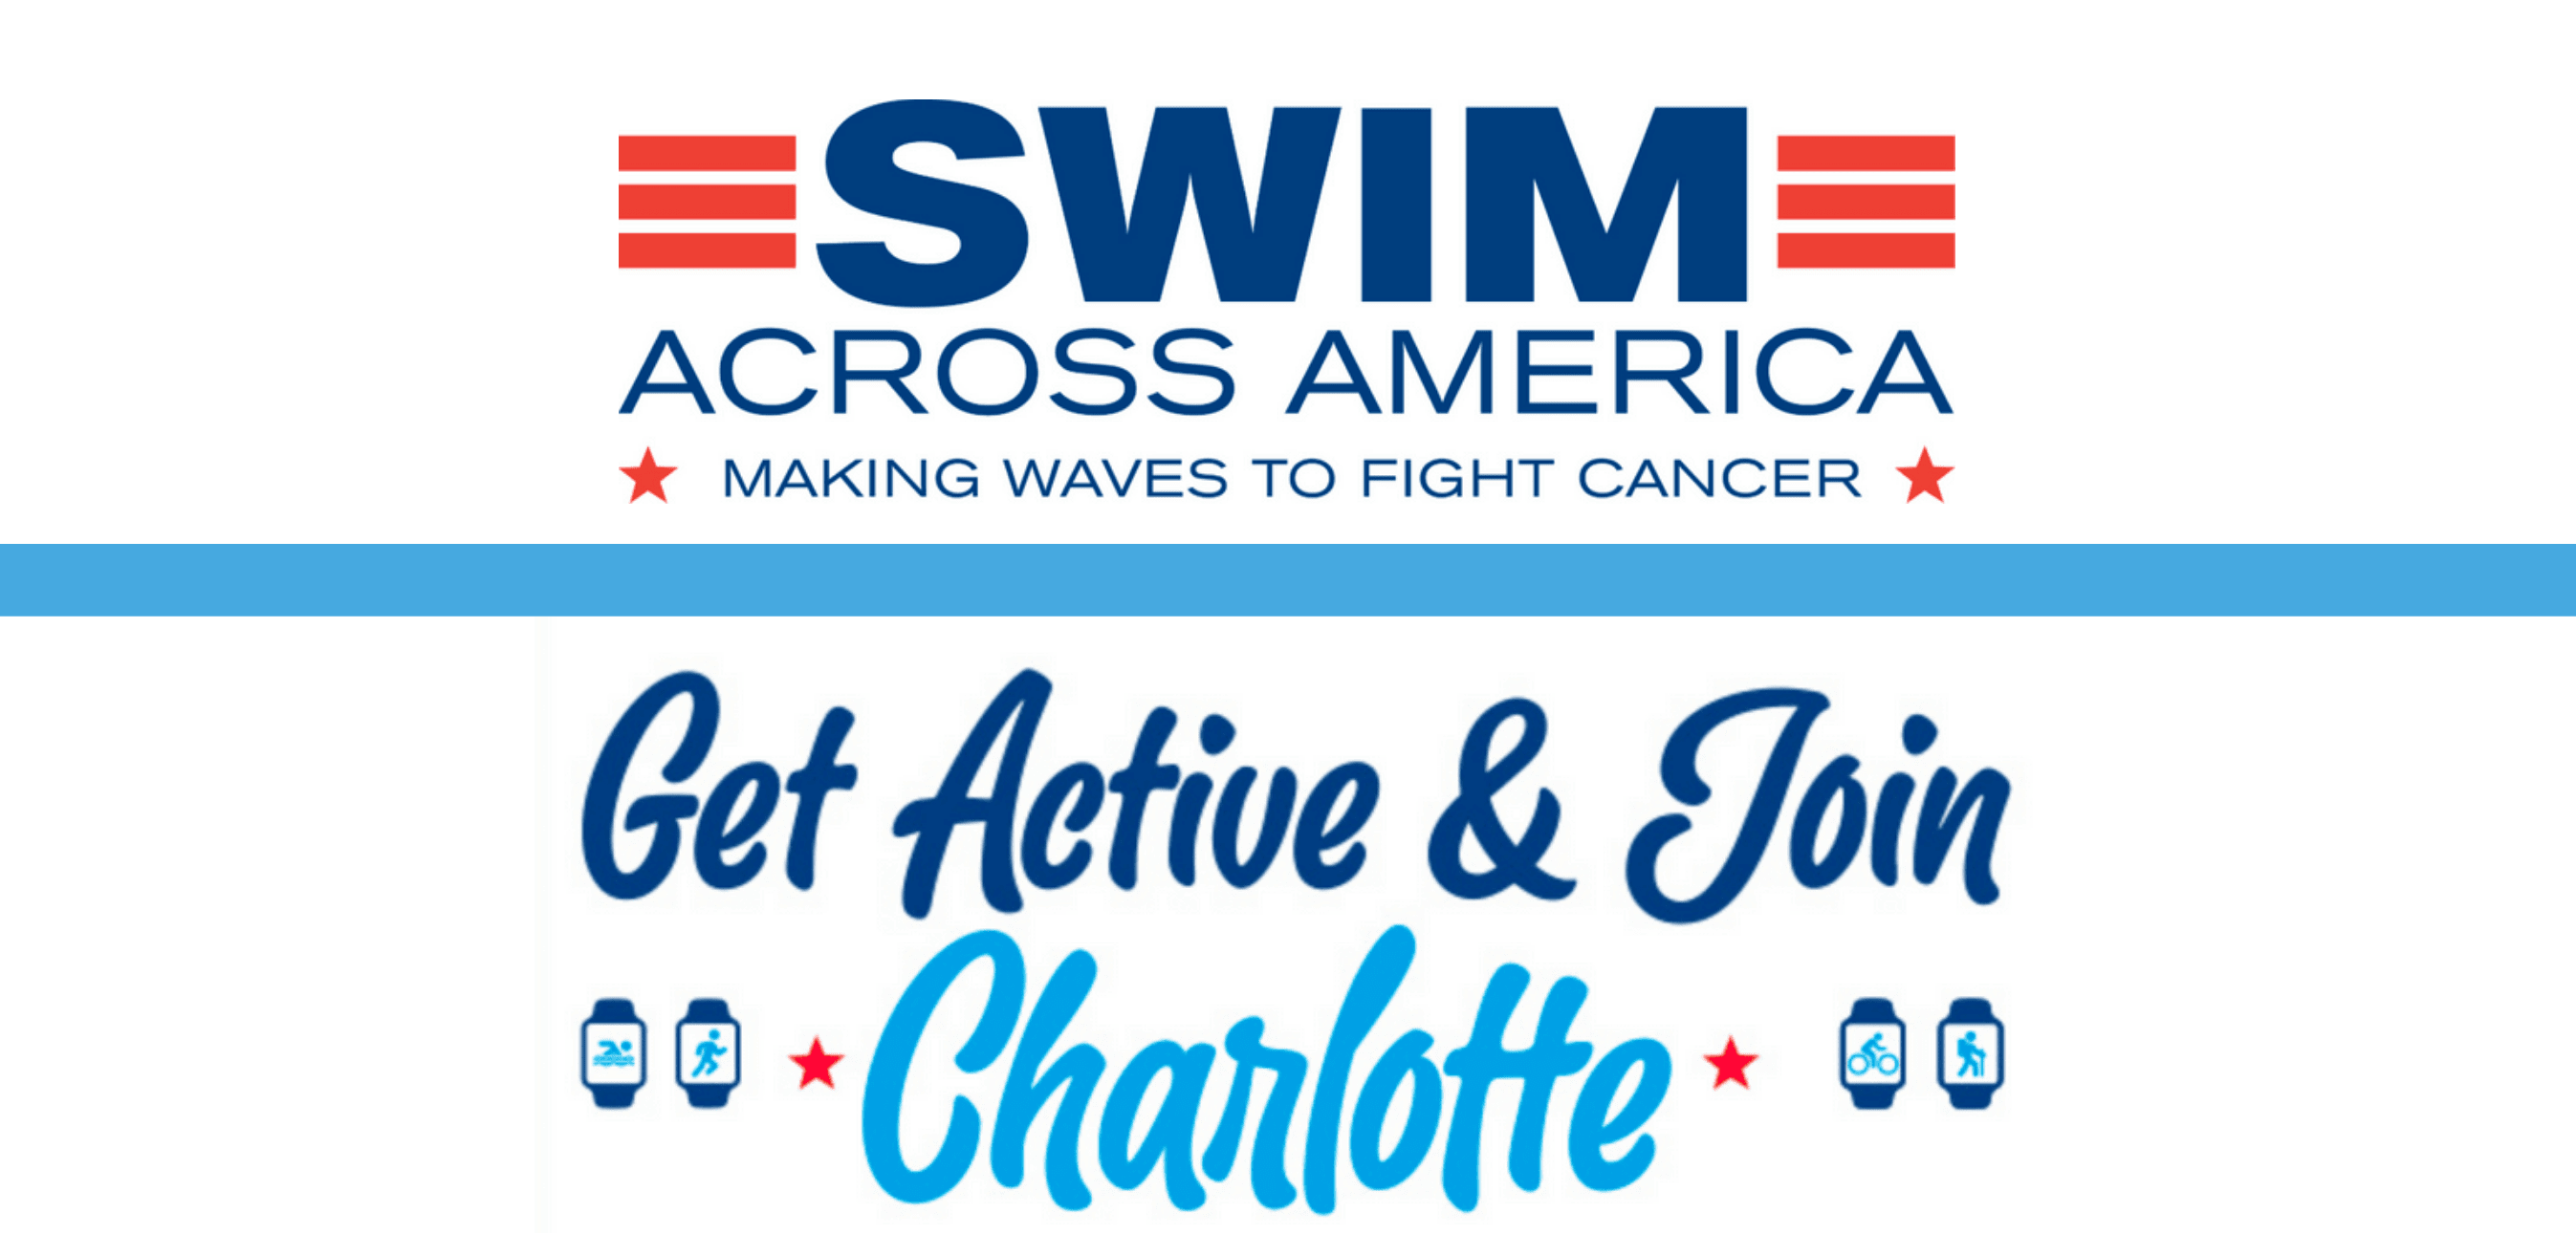 Atrium Health Foundation Swim Across America Is “making Waves” Coast To Coast To Fight Cancer